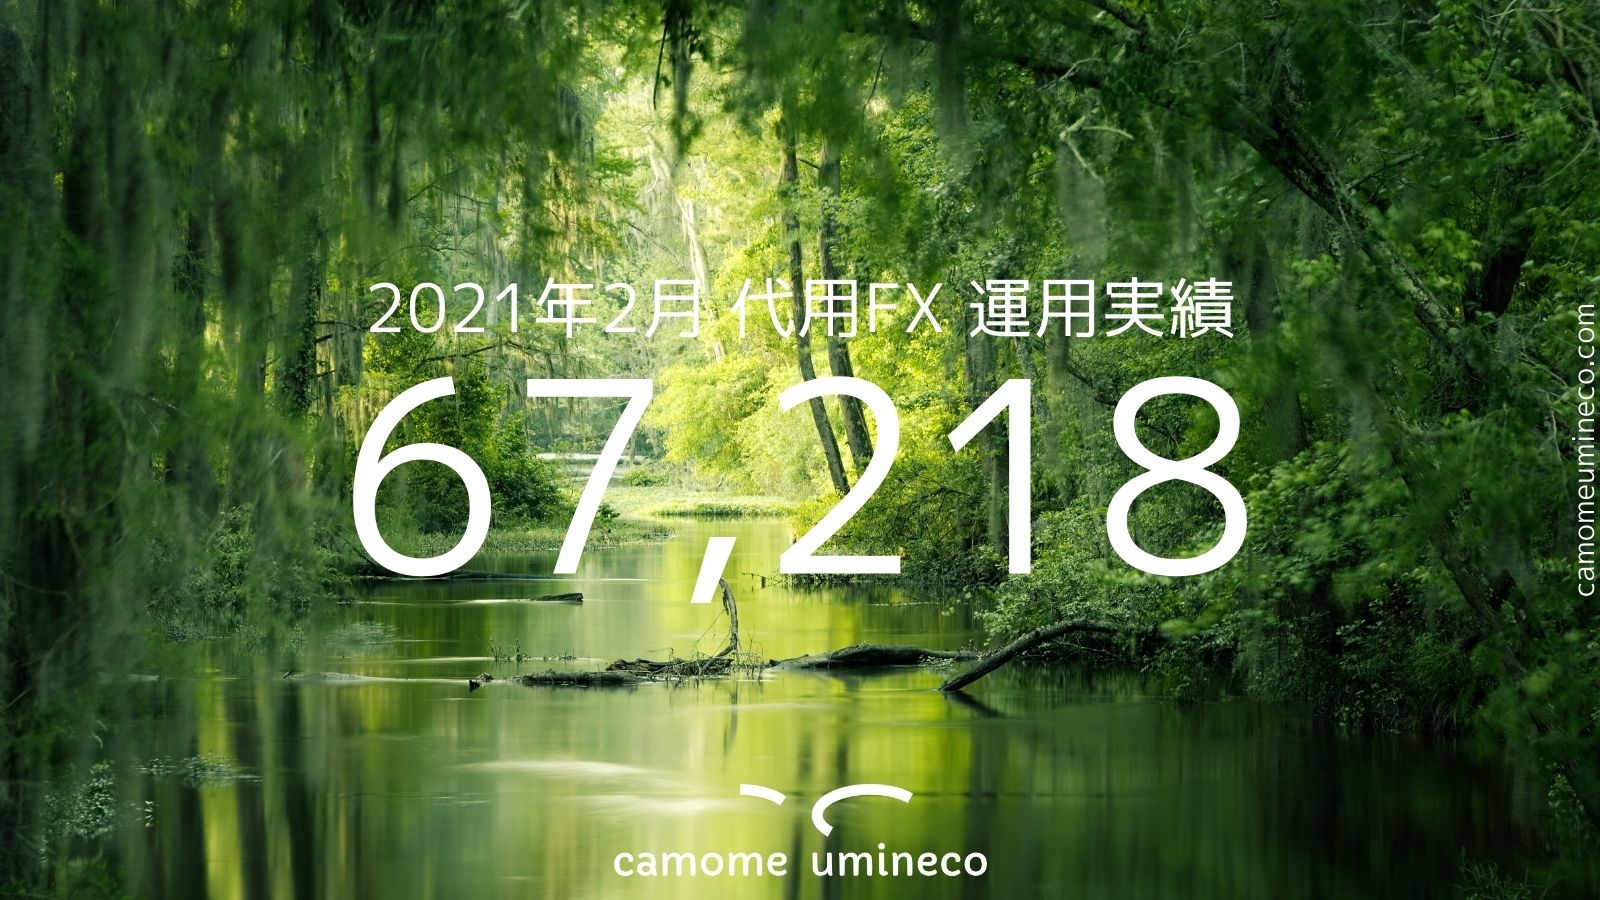 【auカブコム】2021年2月 代用FX 運用実績 67,218円